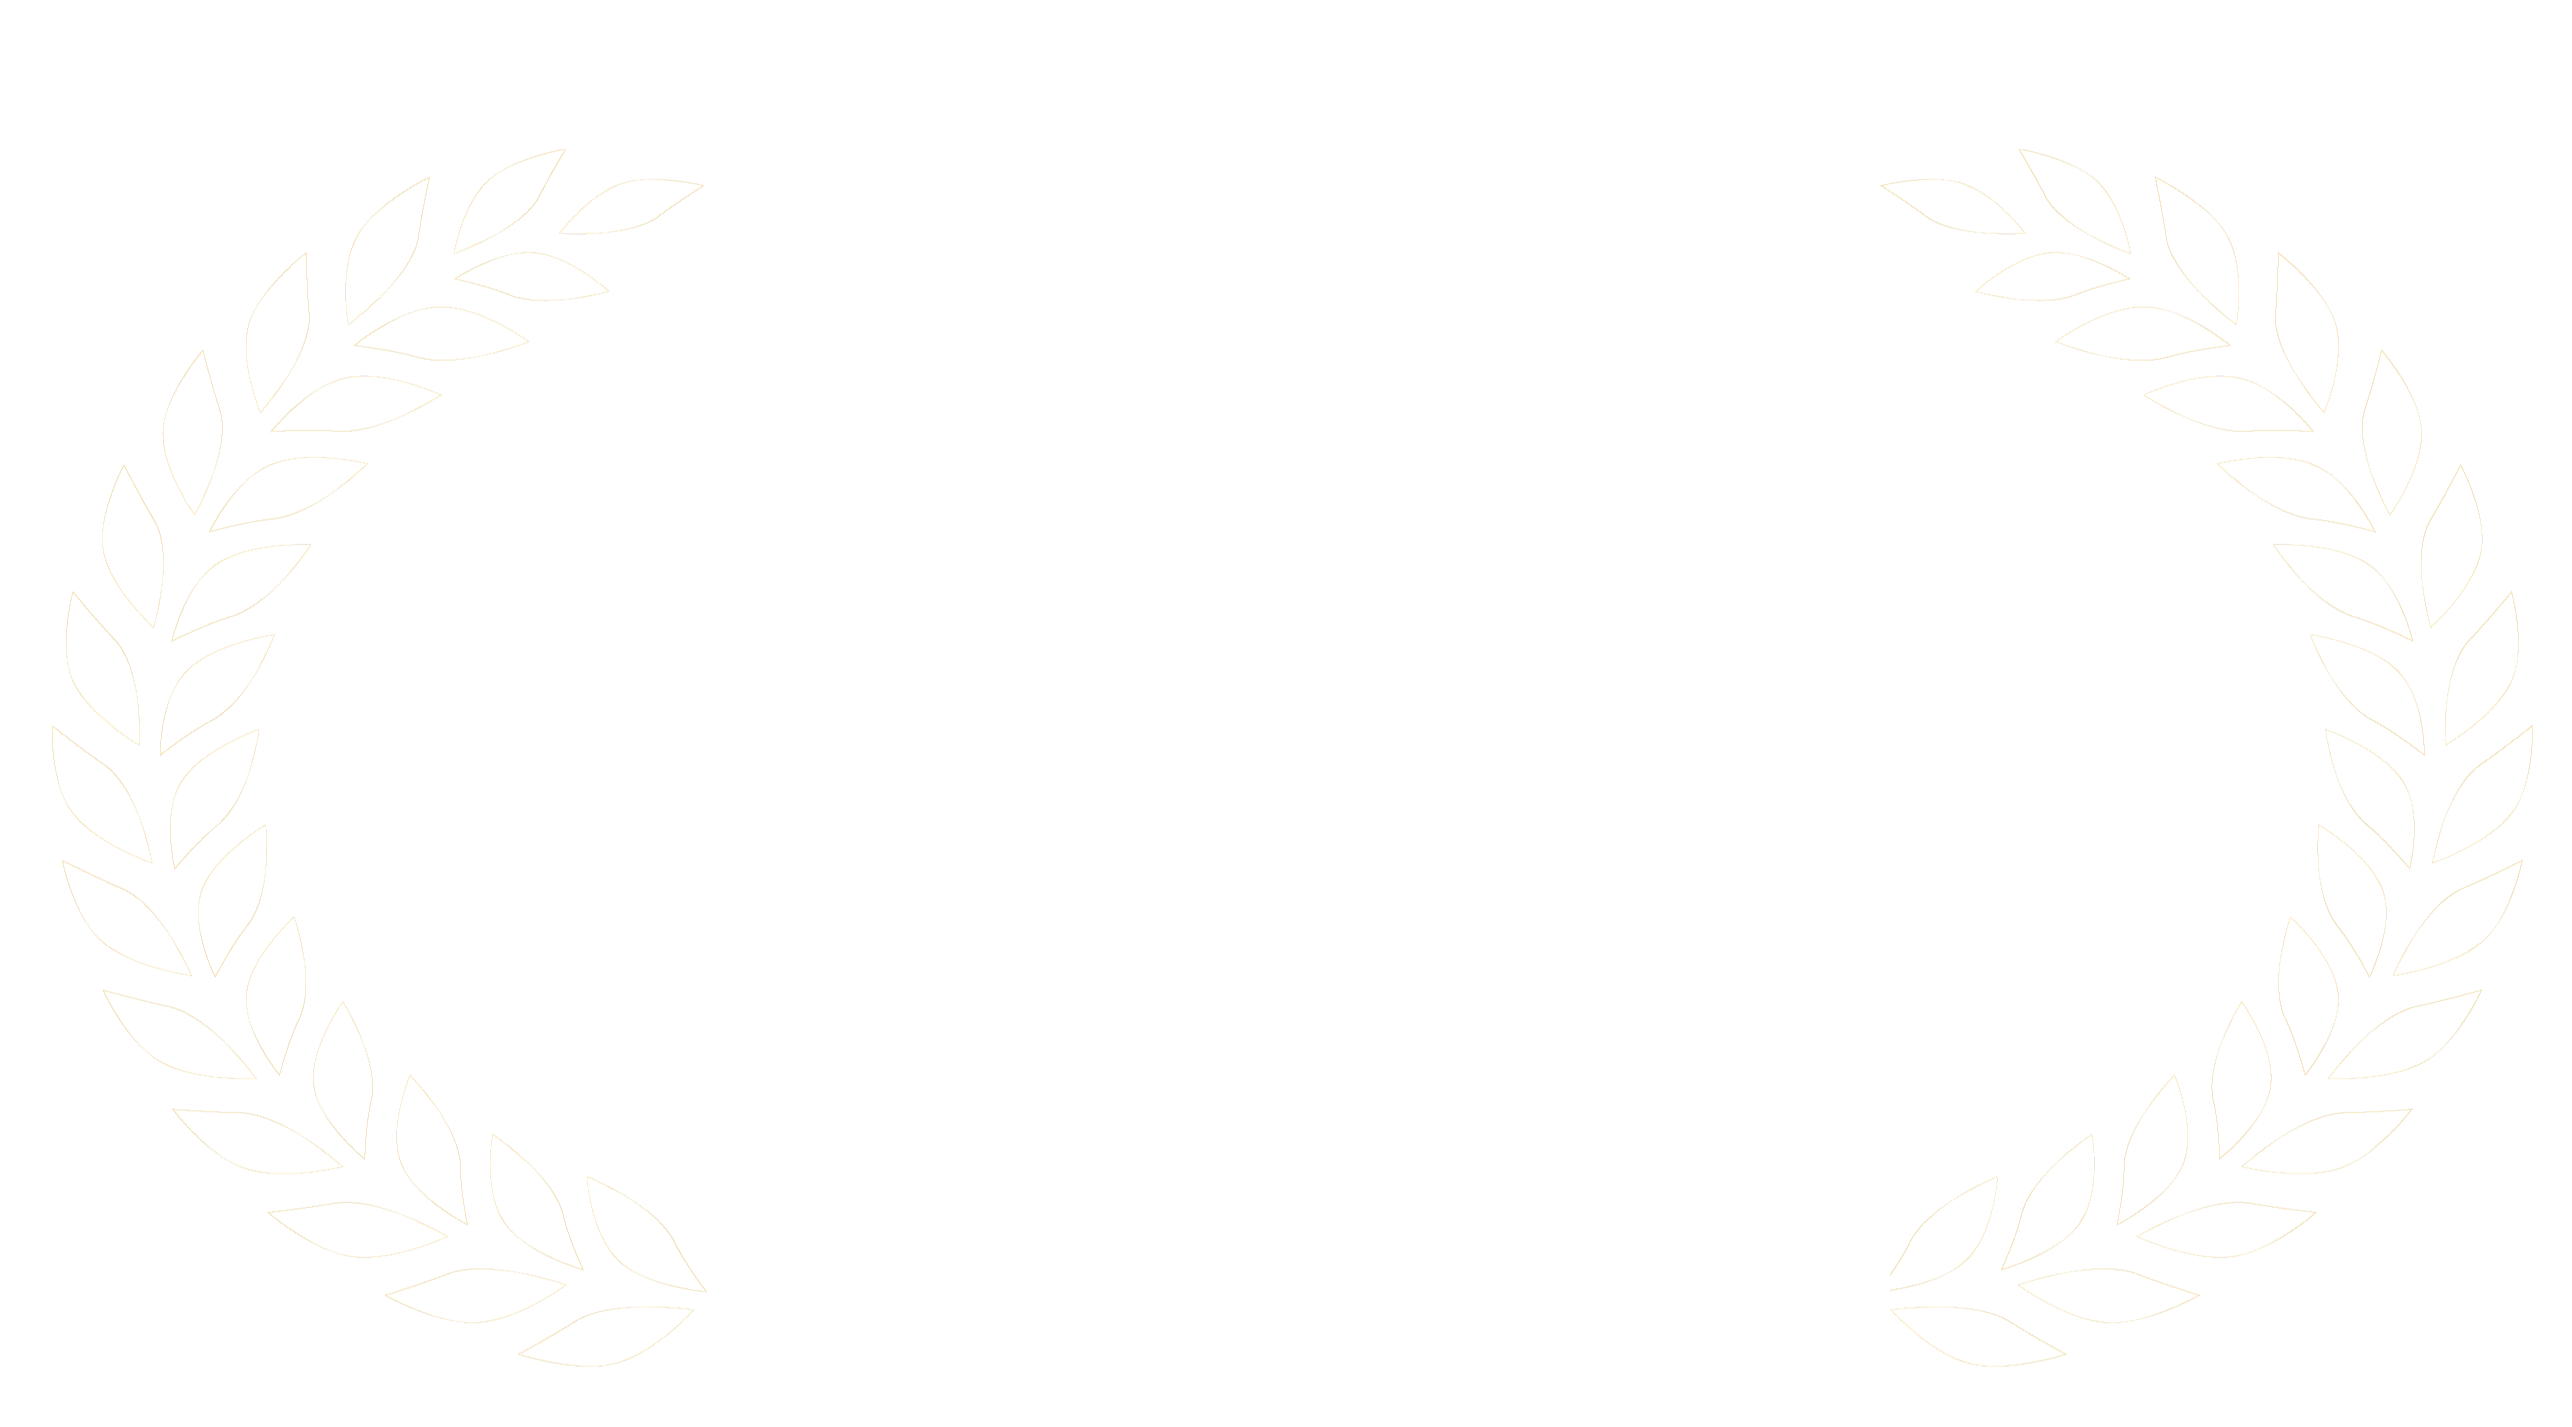 Holborn Assets (DIFC) Limited